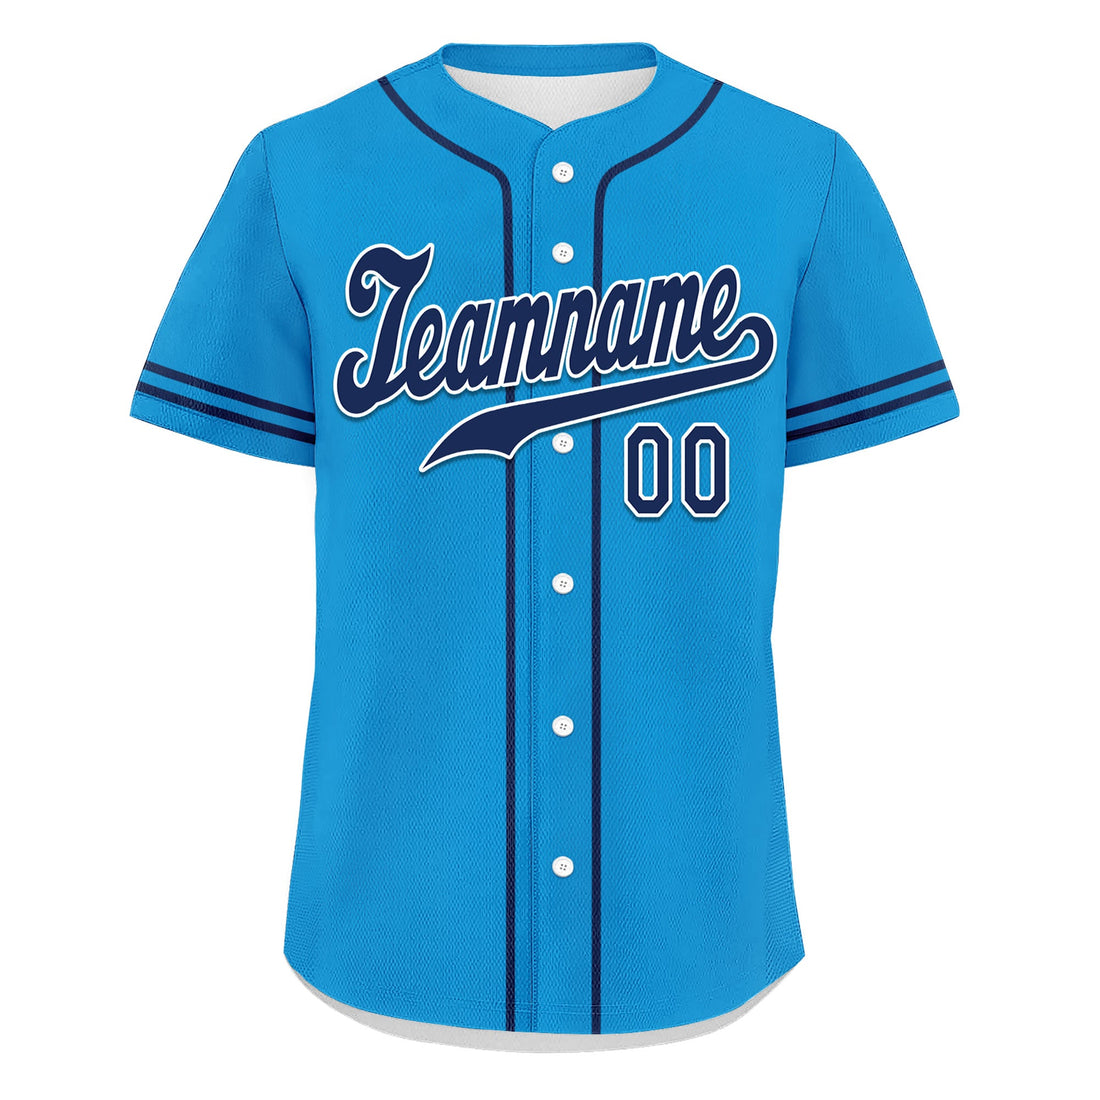 Custom Blue Classic Style Black Personalized Authentic Baseball Jersey UN002-bd0b00d8-cc